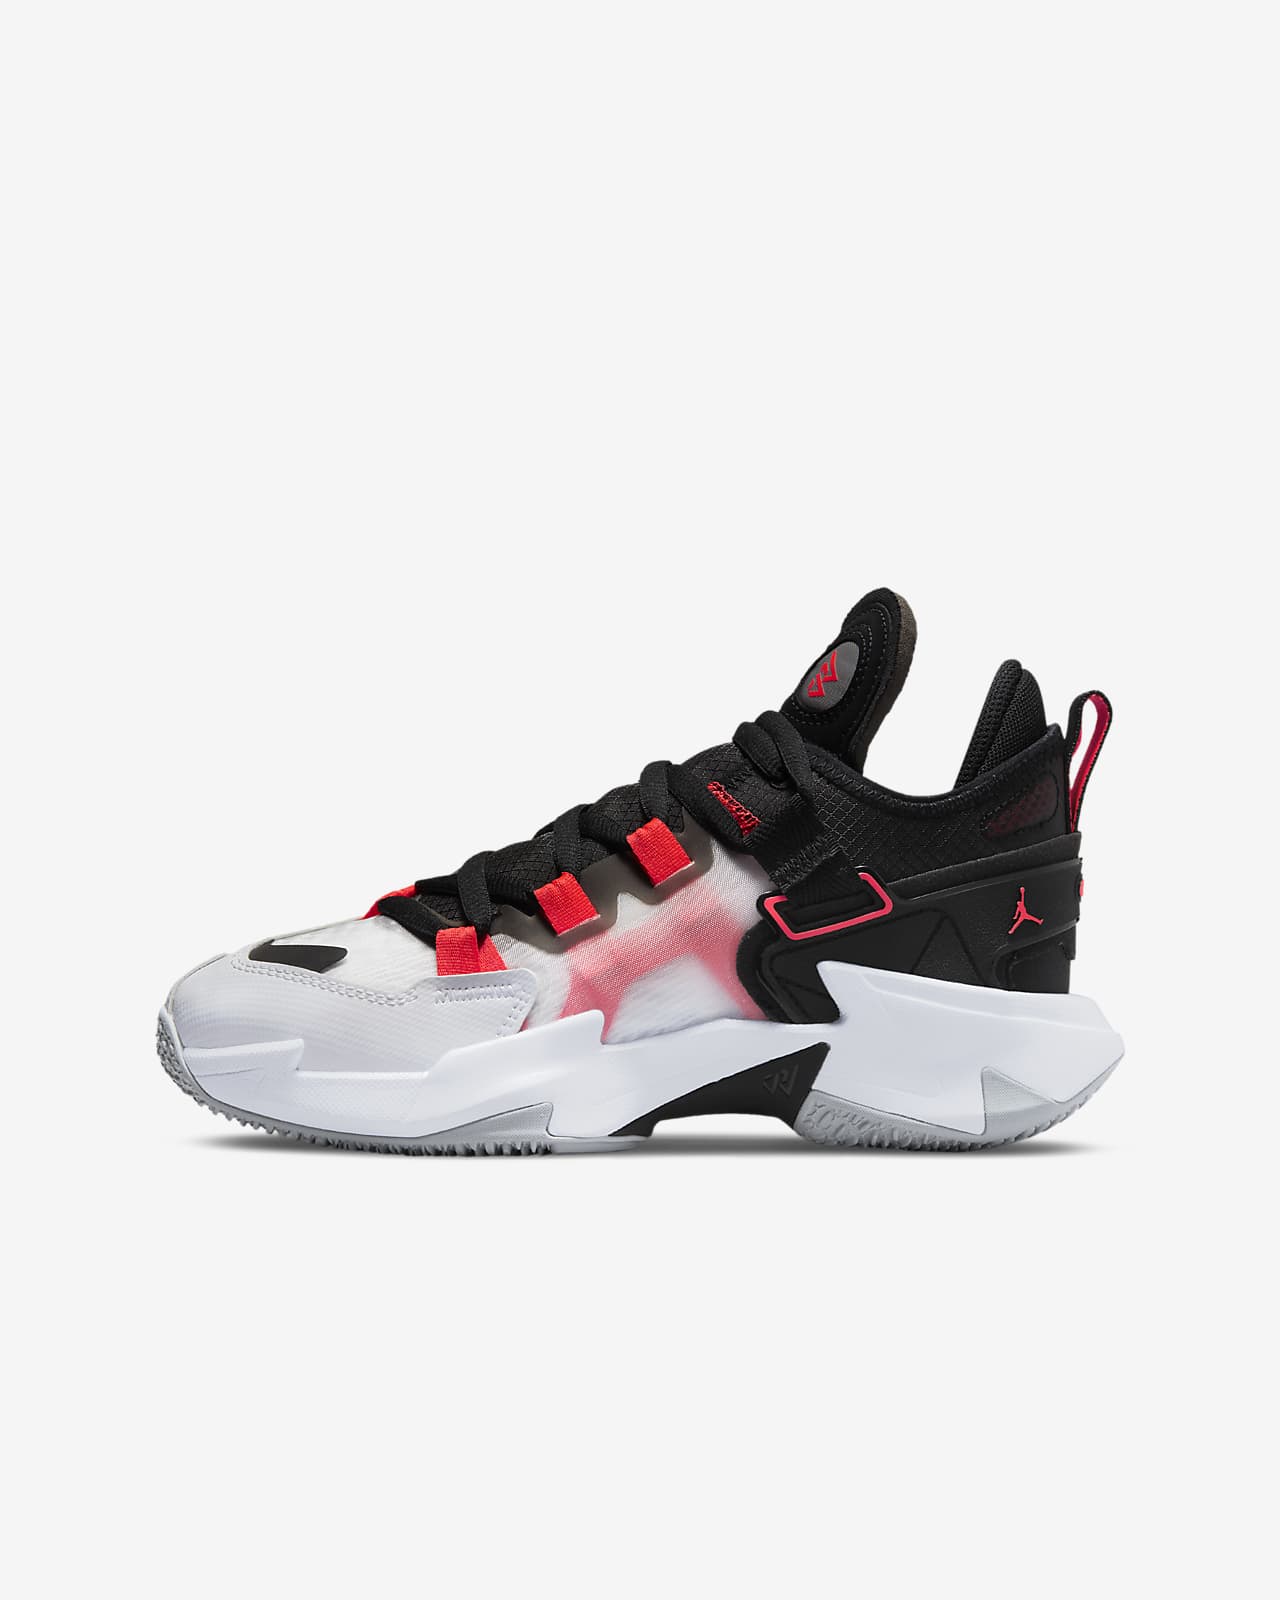 Jordan 'Why Not?' Zer0.5 Older Kids' Basketball Shoes